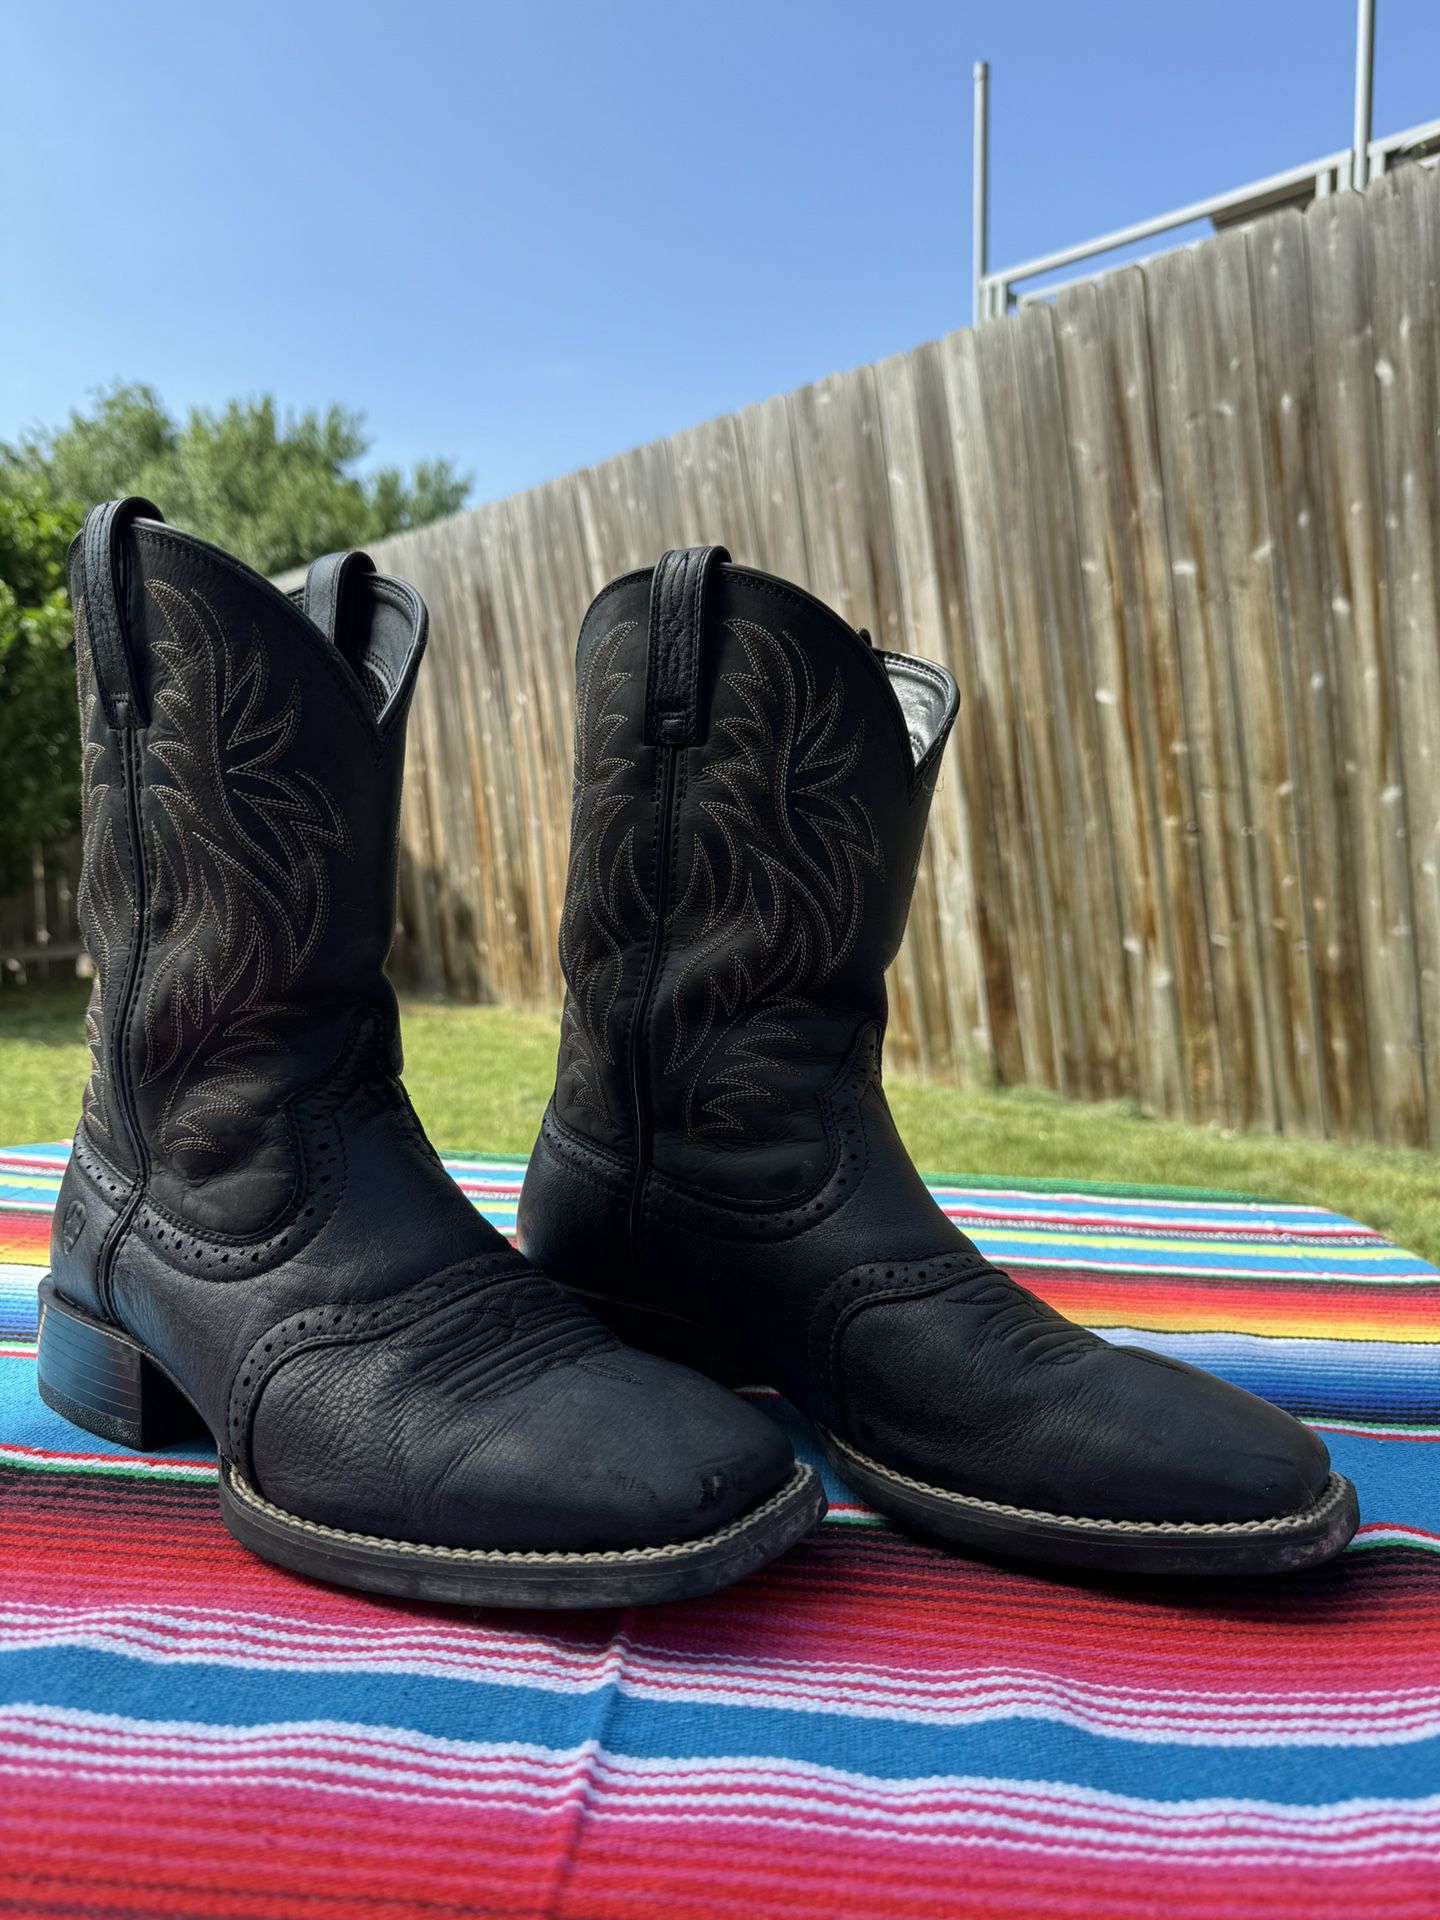 Ariat Men's Sport Black Wide Square Toe Cowboy Boots